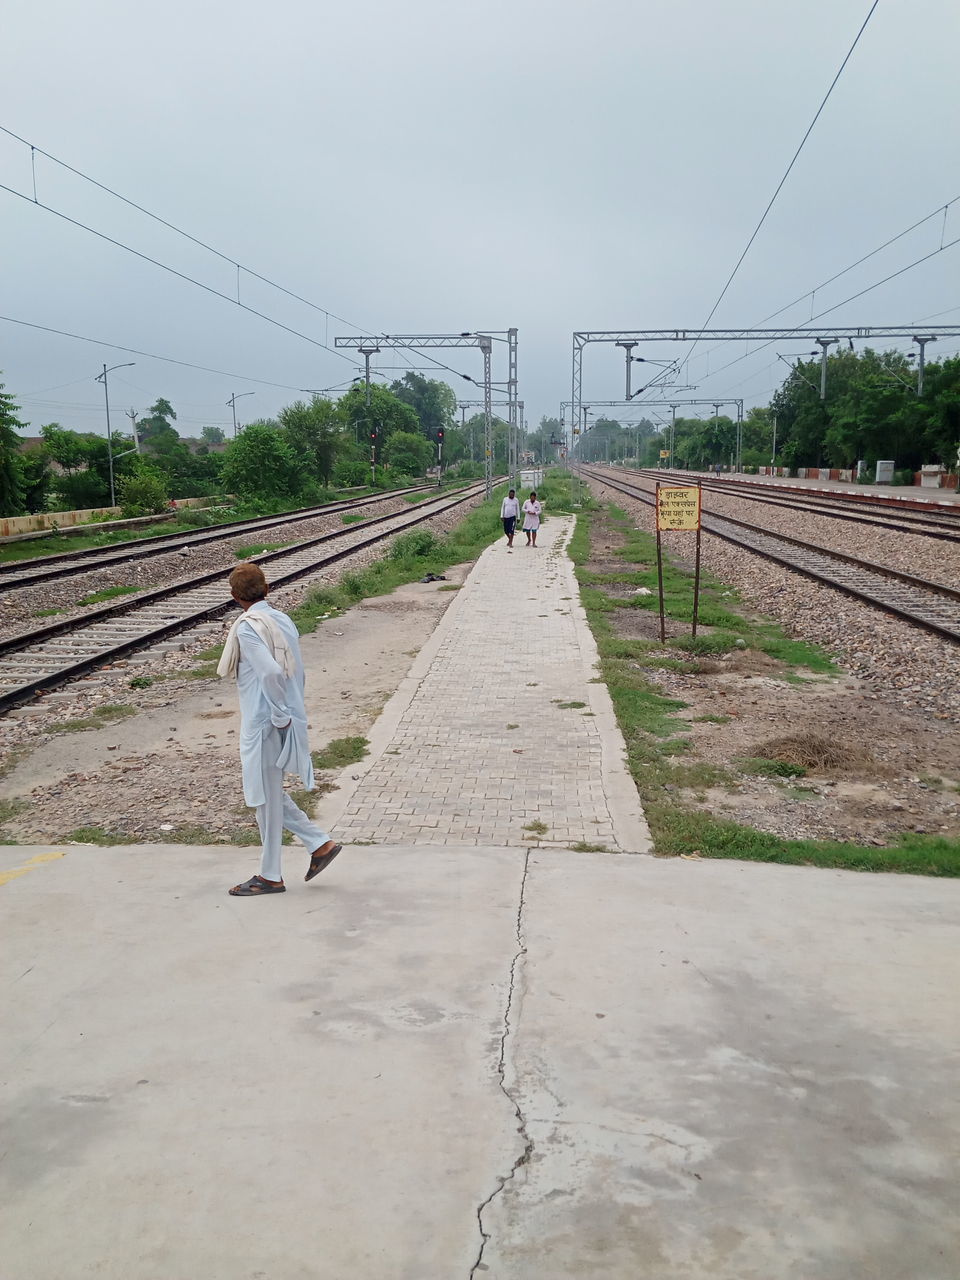 REAR VIEW OF MAN WALKING ON RAILROAD TRACKS